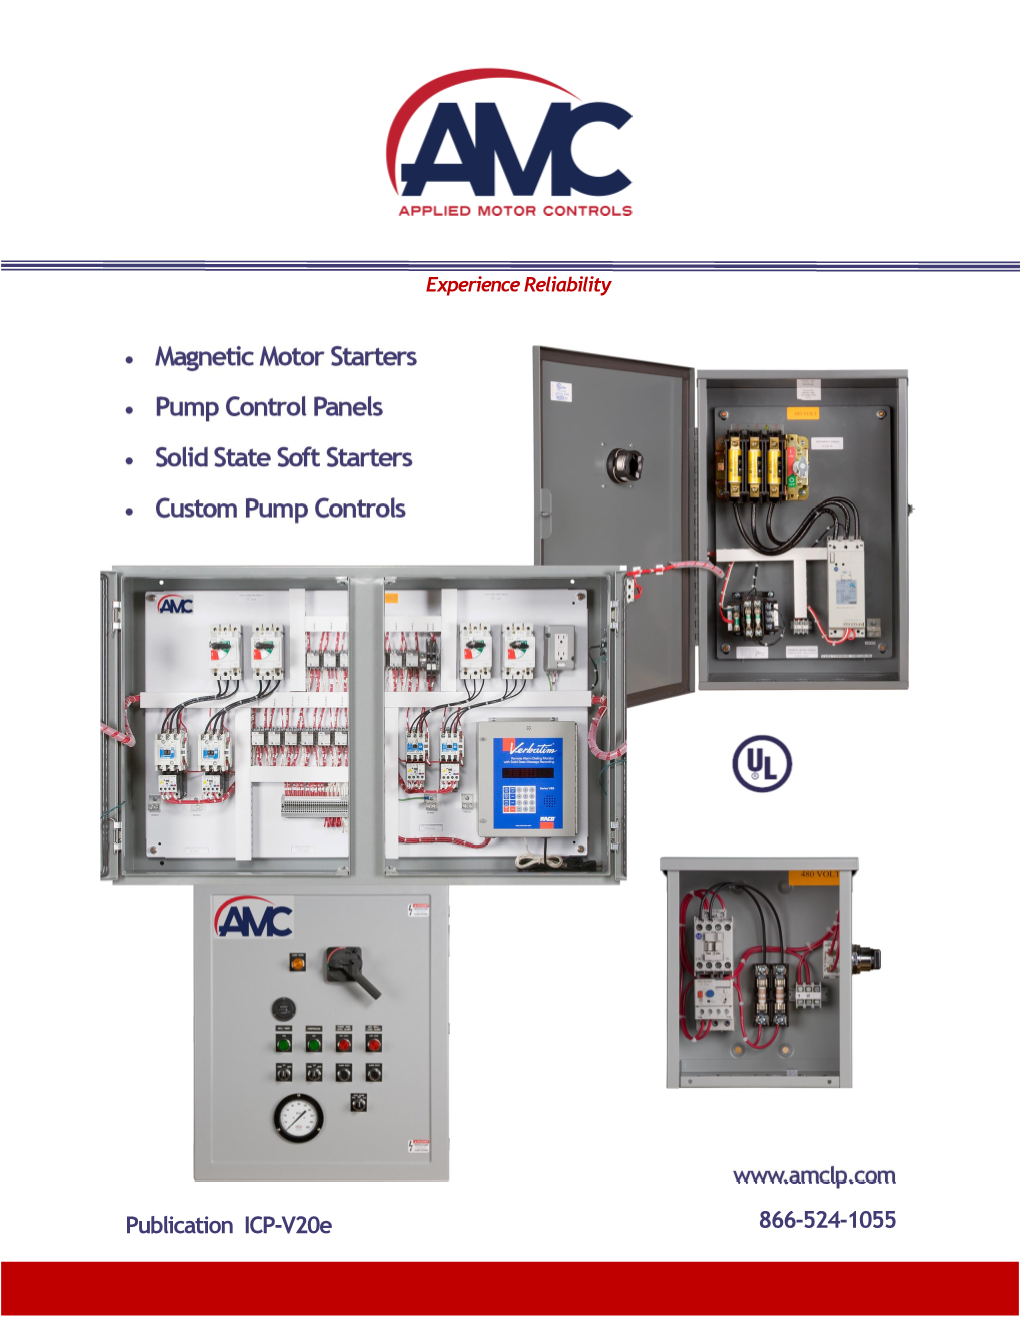 • Magnetic Motor Starters • Pump Control Panels • Solid State Soft Starters • Custom Pump Controls